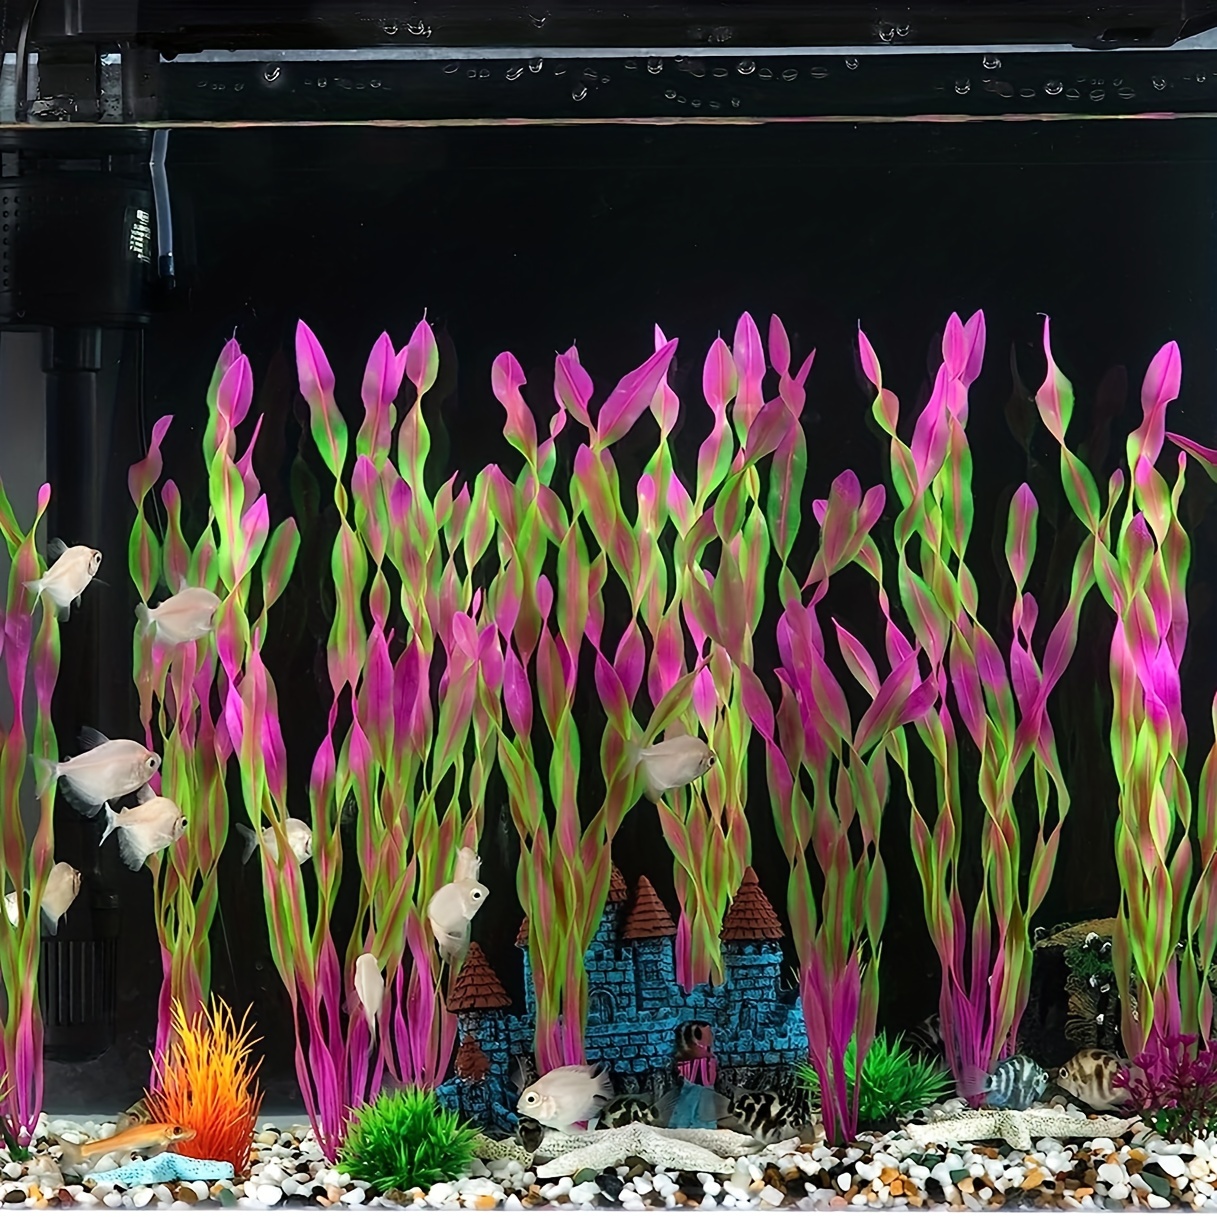 5pcs Artificial Seaweed Water Plants Plastic Aquatic Grass Plants Fish Tank  Decorations, Shop Now For Limited-time Deals